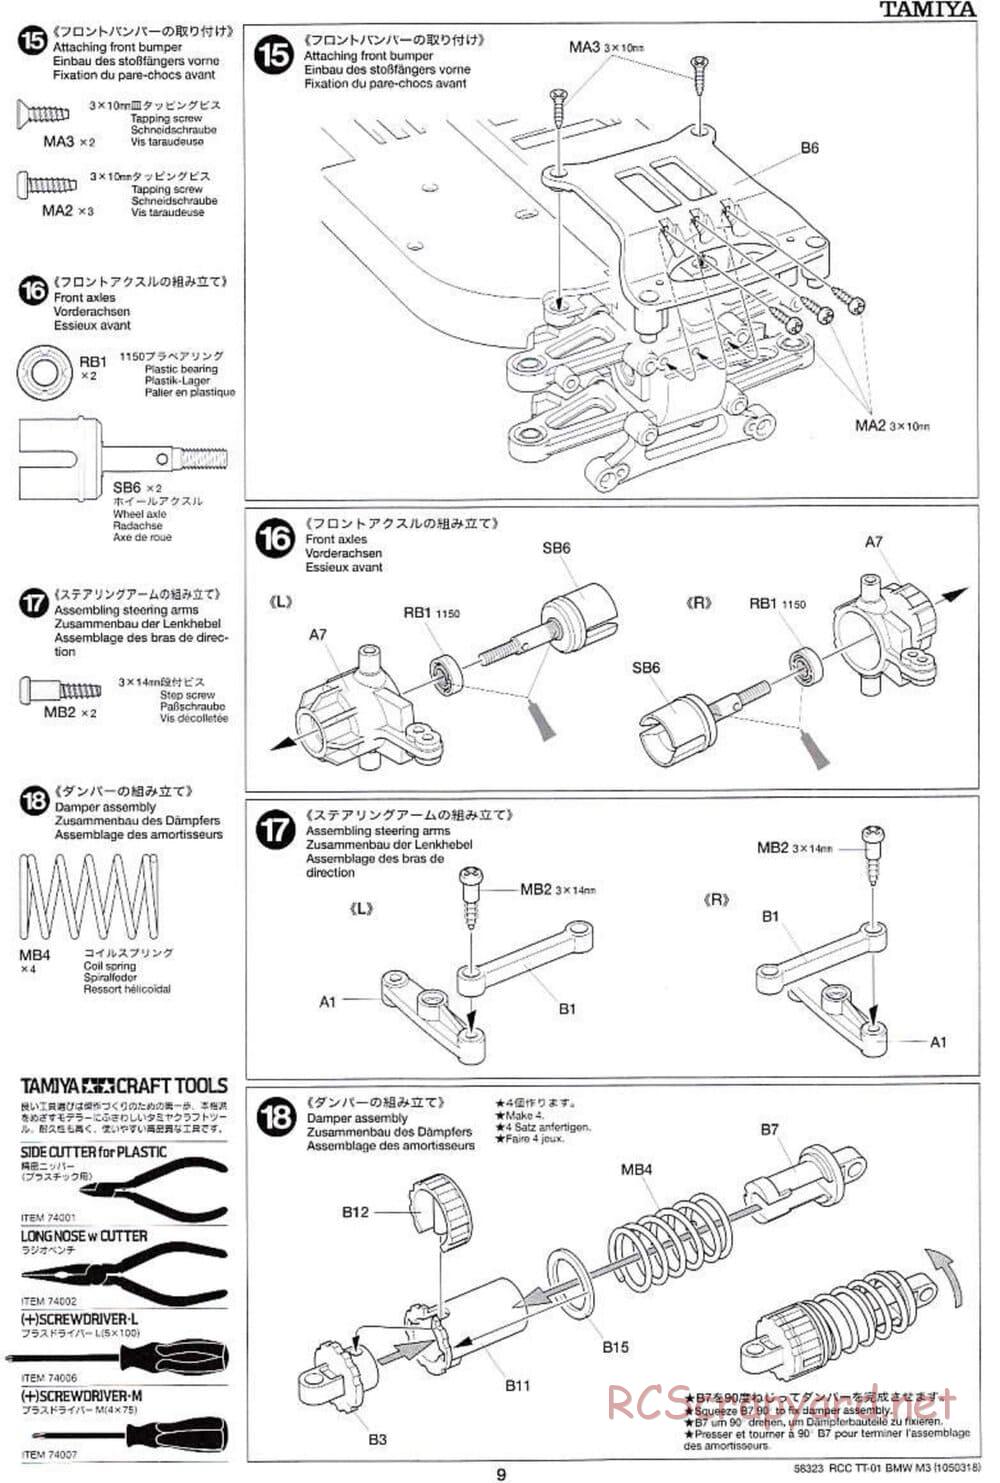 Tamiya - Schnitzer BMW M3 Sport Evo - TT-01 Chassis - Manual - Page 9